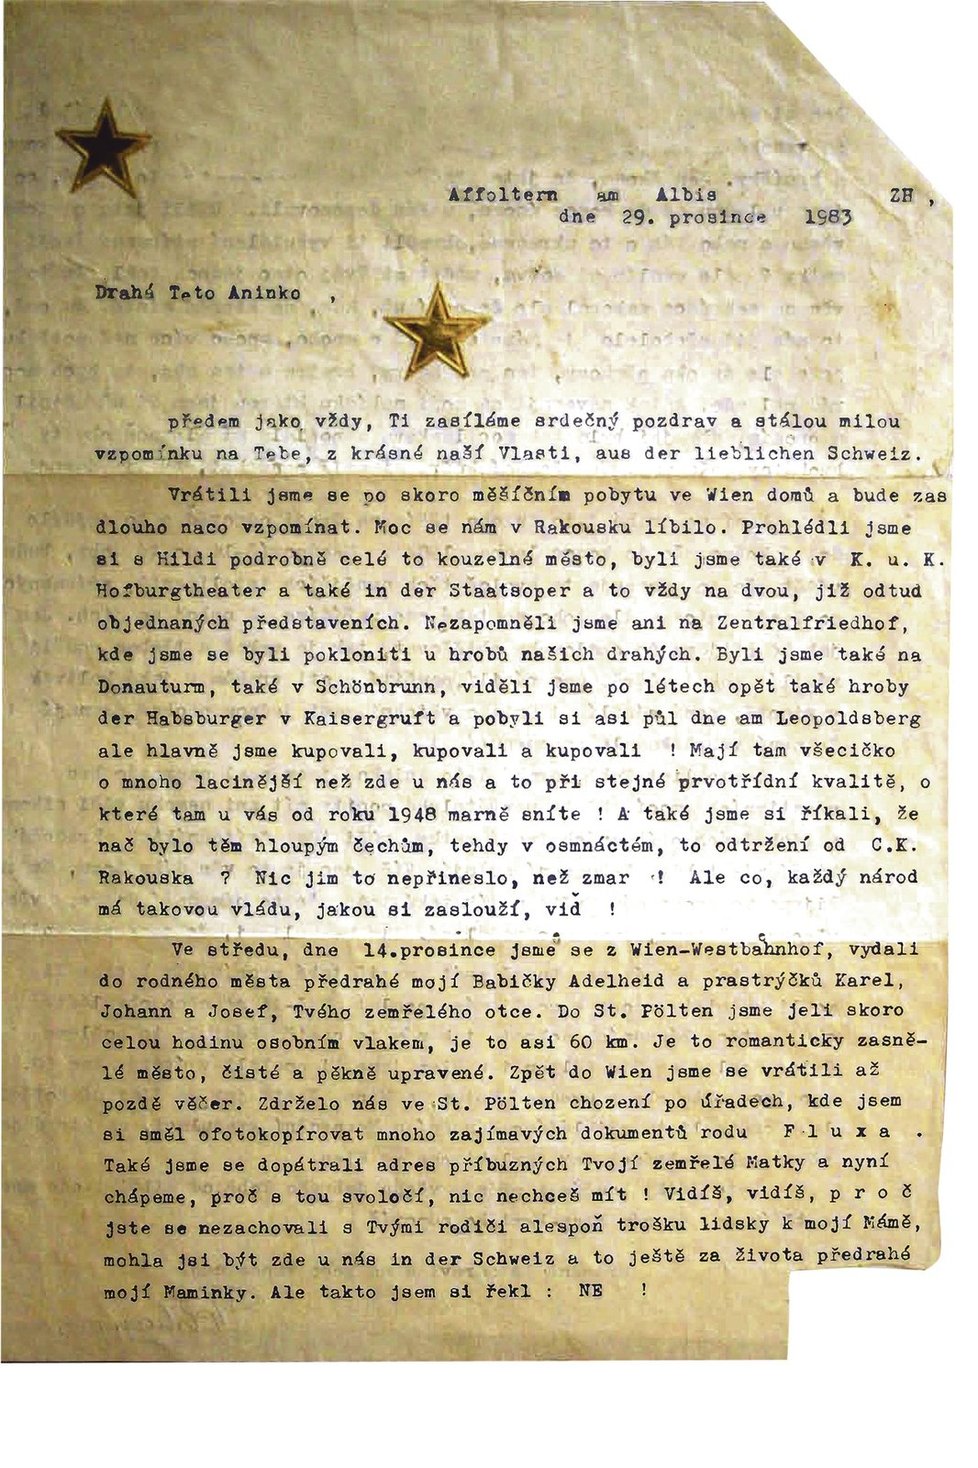 Ukázka korespondence z Rakouska, zachycená StB v akci Kostel.